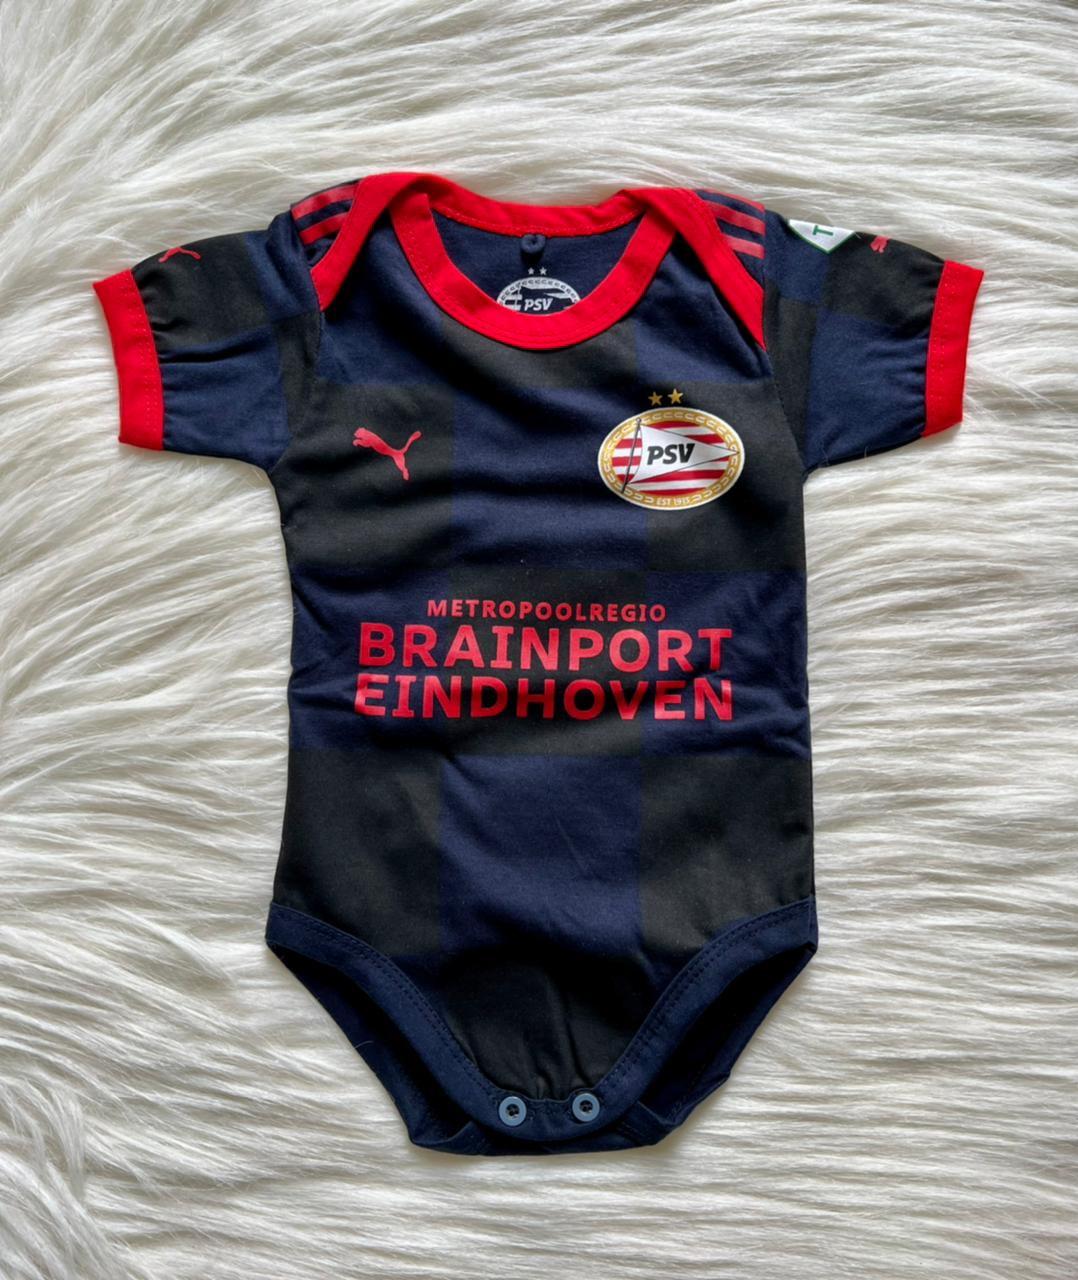 Sport babies  Little champions – Sportbabies